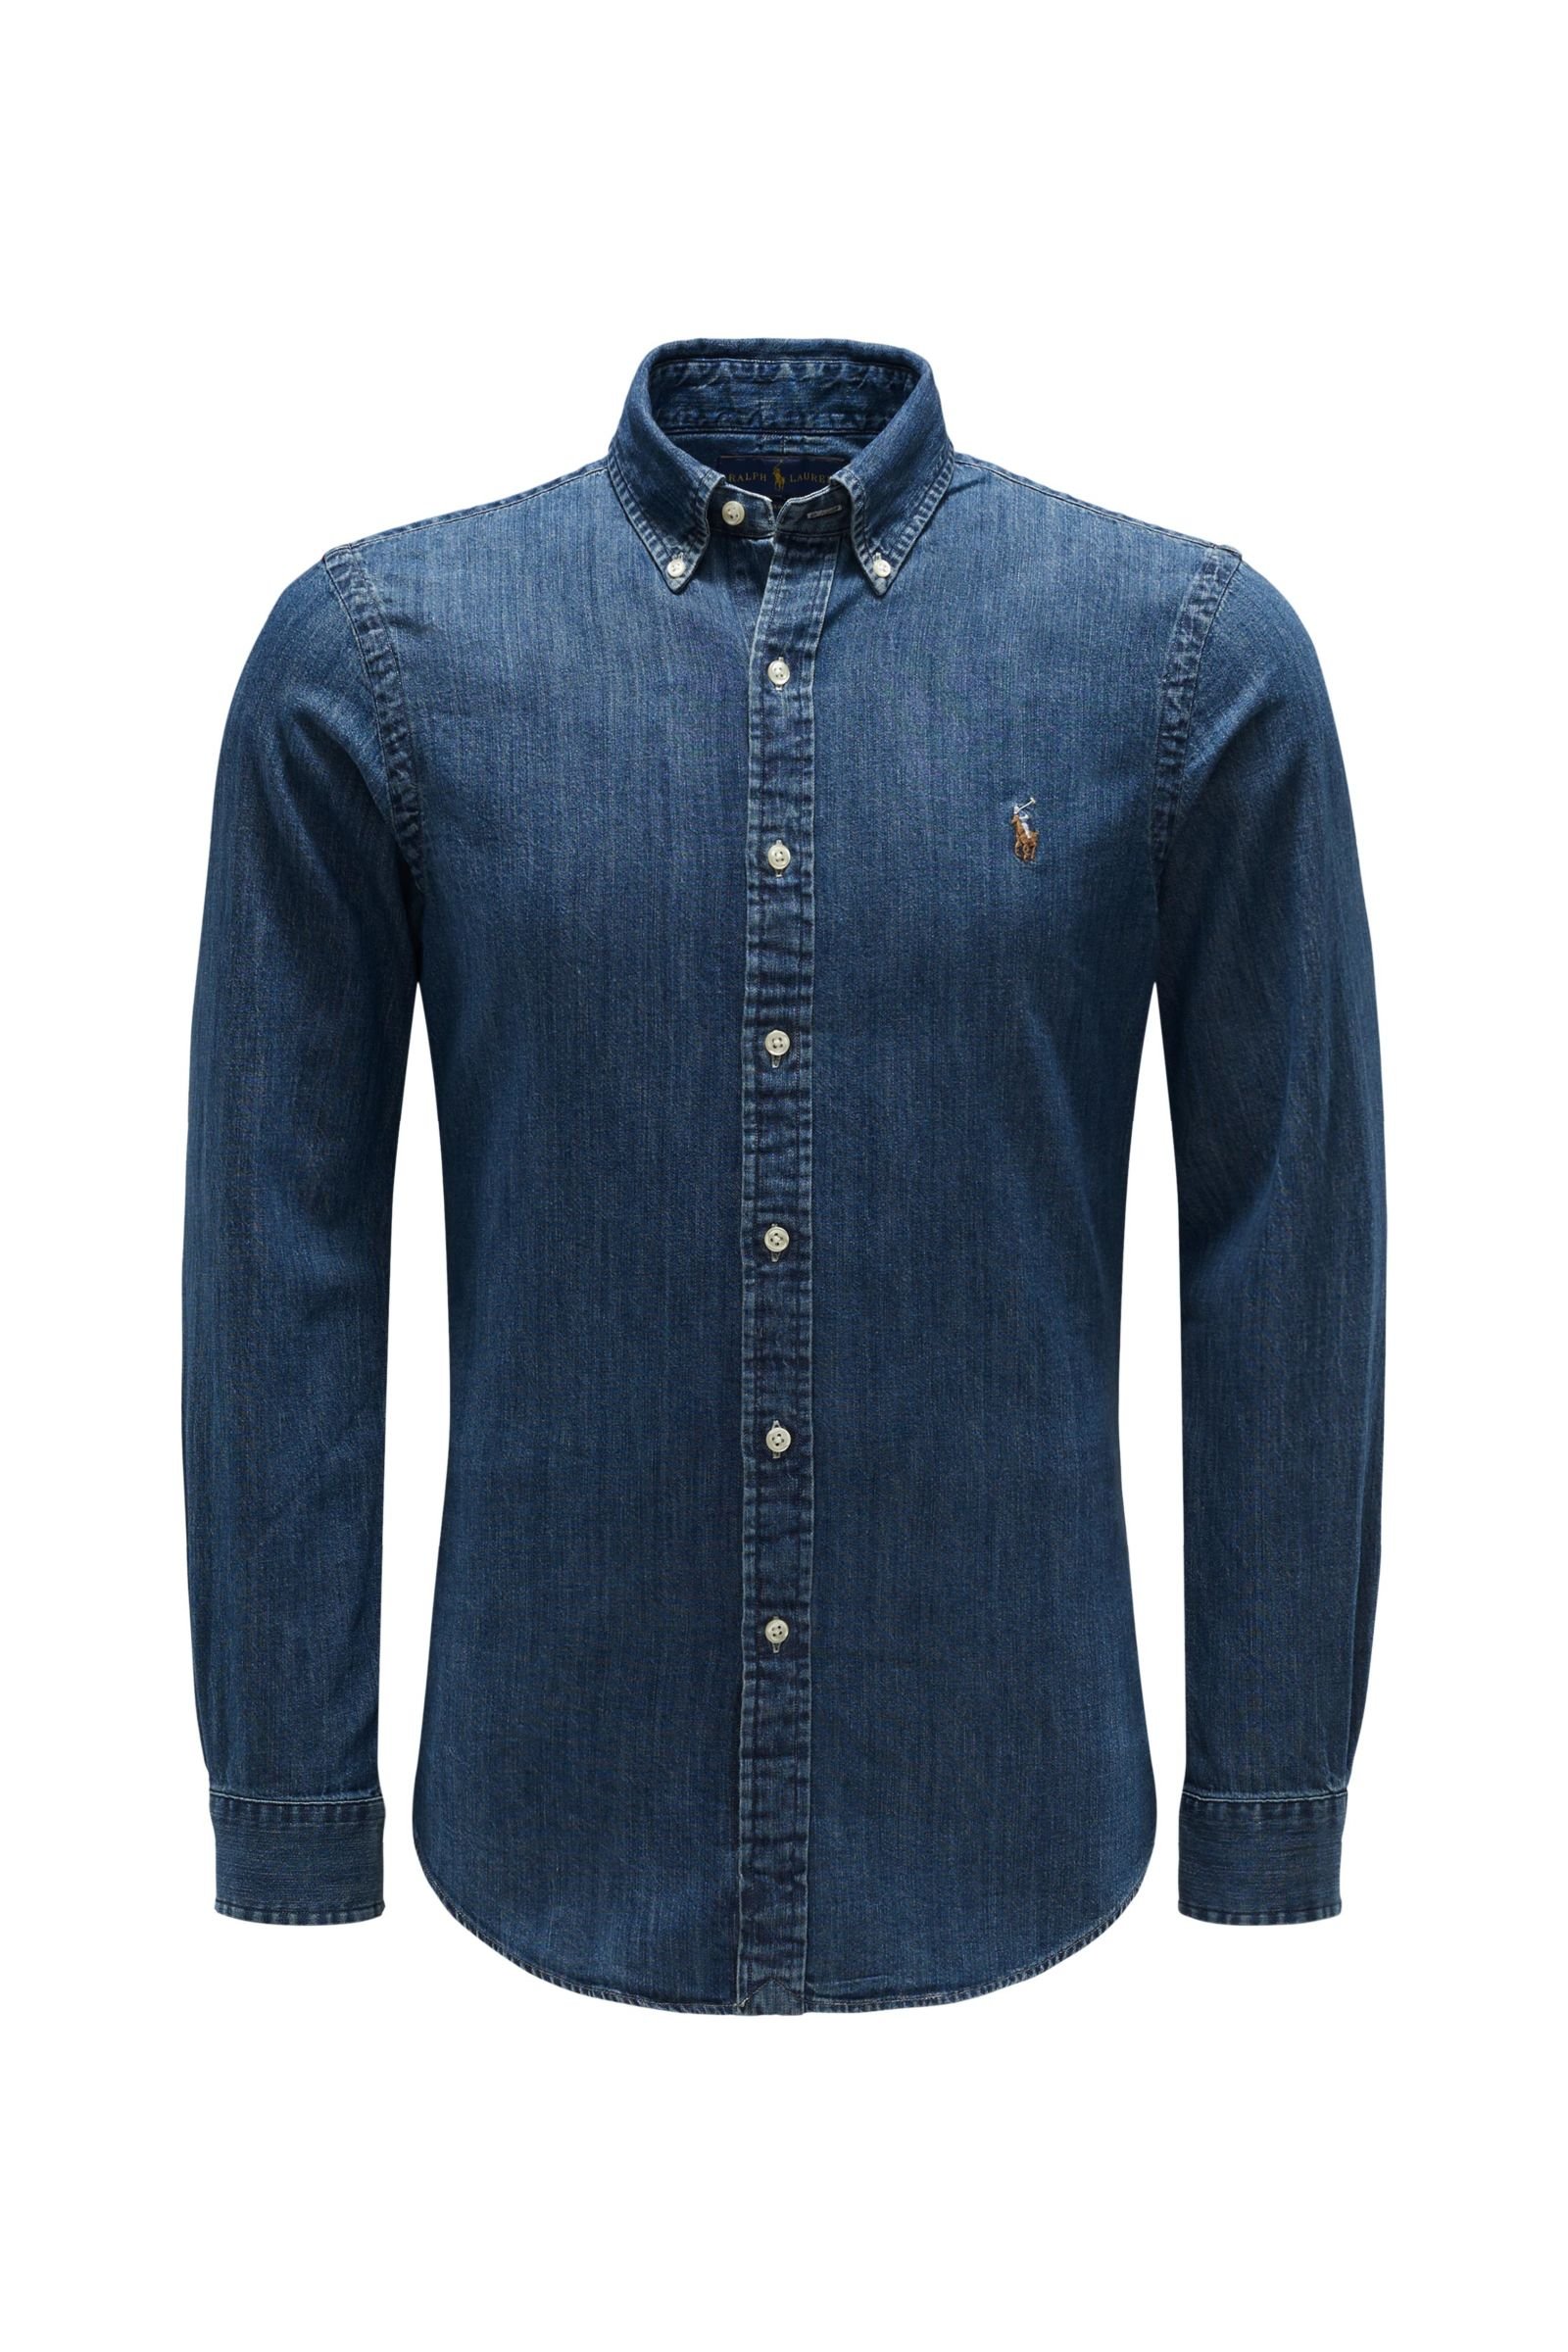 Denim shirt button-down collar grey-blue